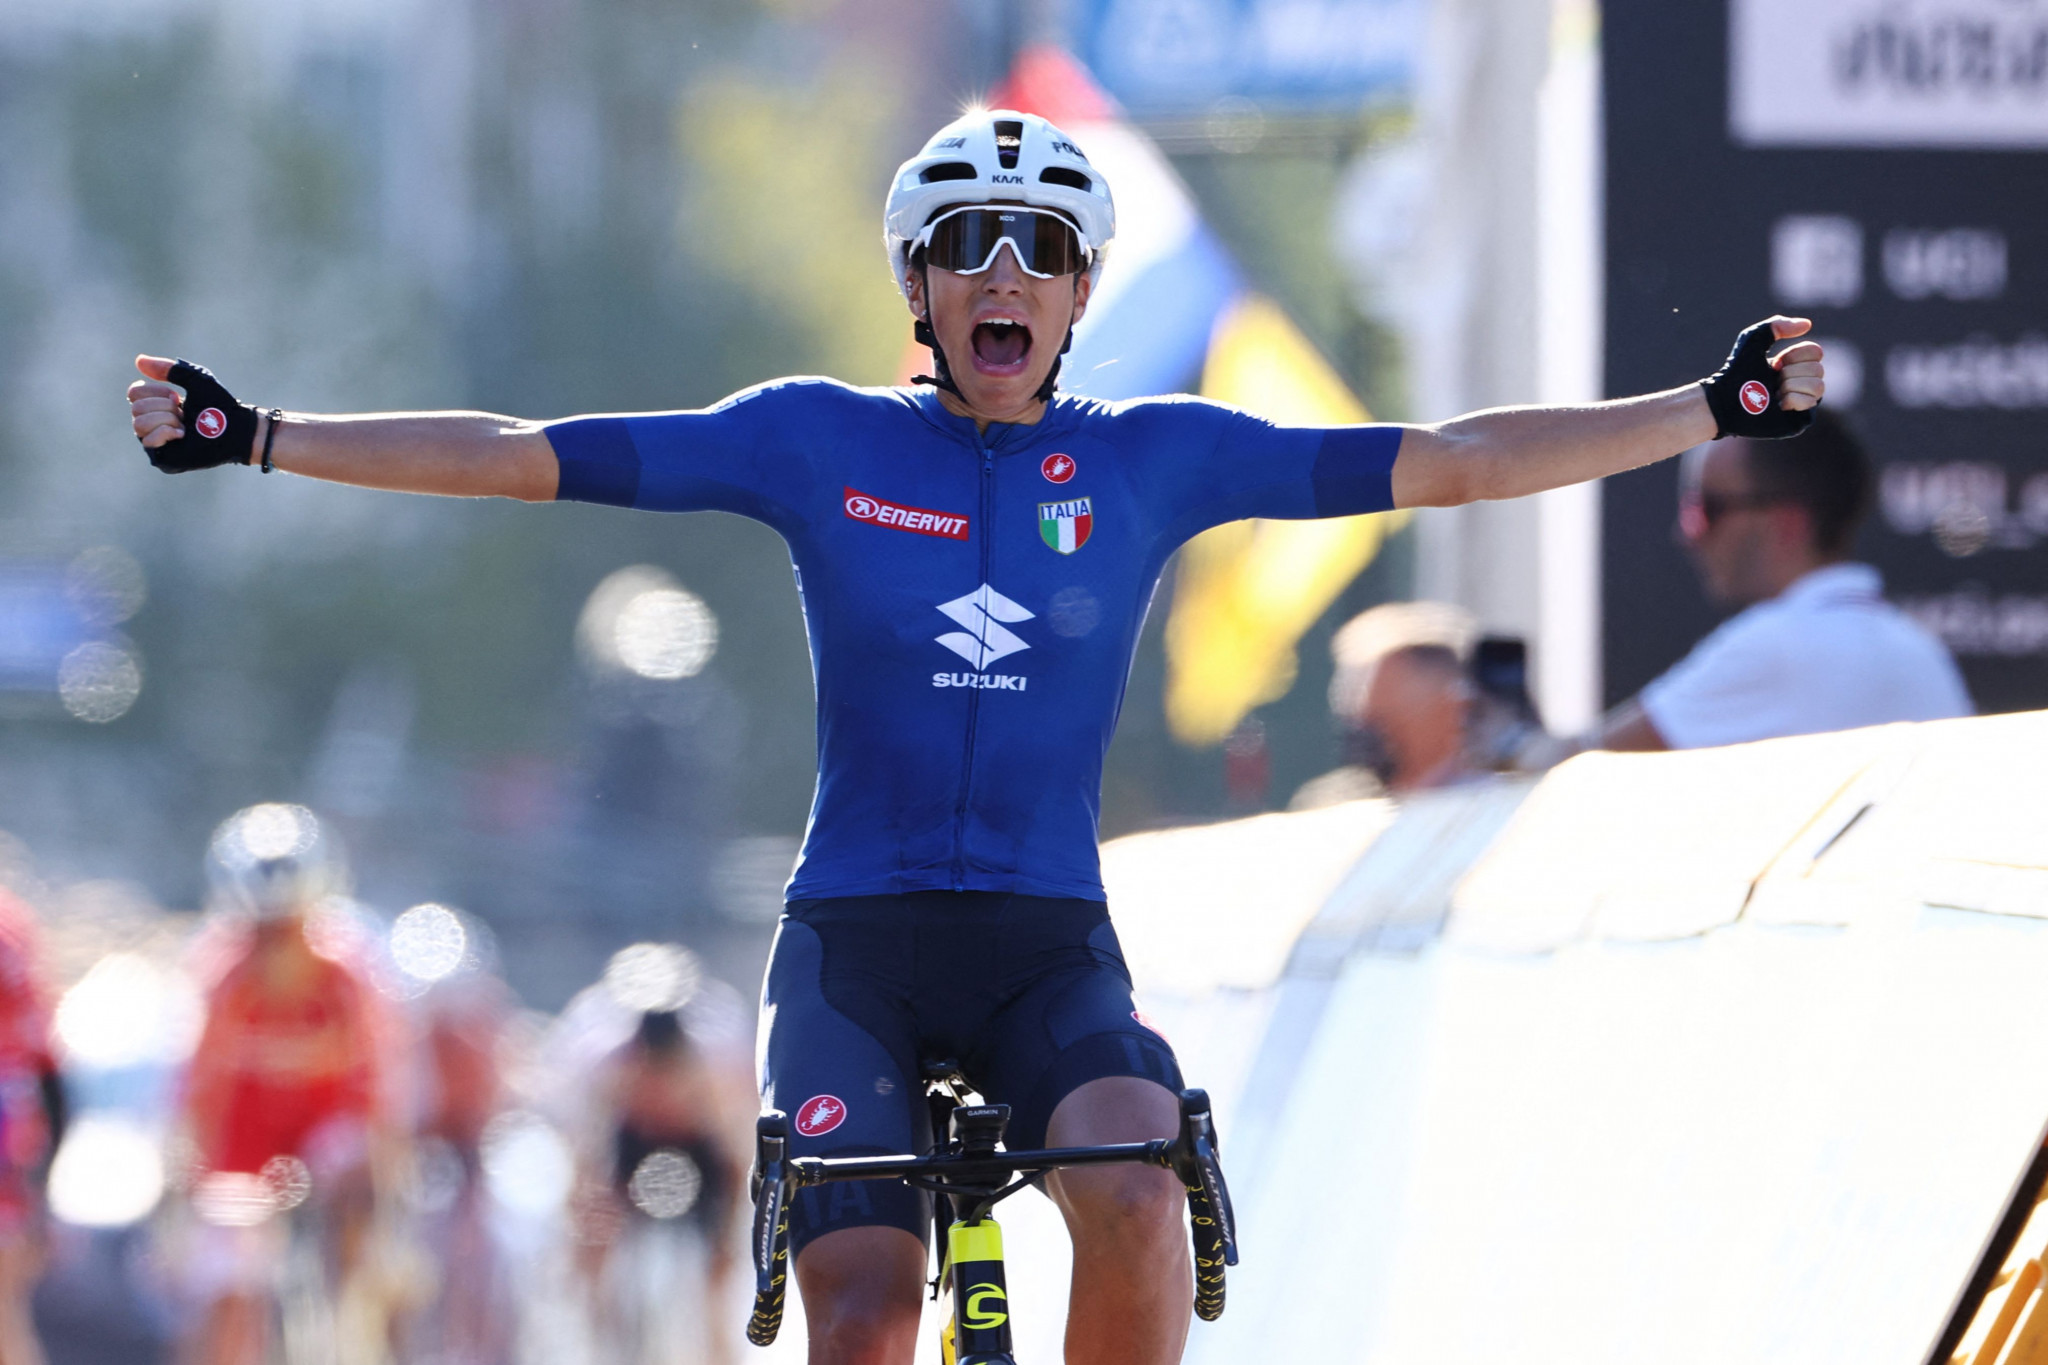 Balsamo wins dramatic elite women's race at UCI Road World Championships